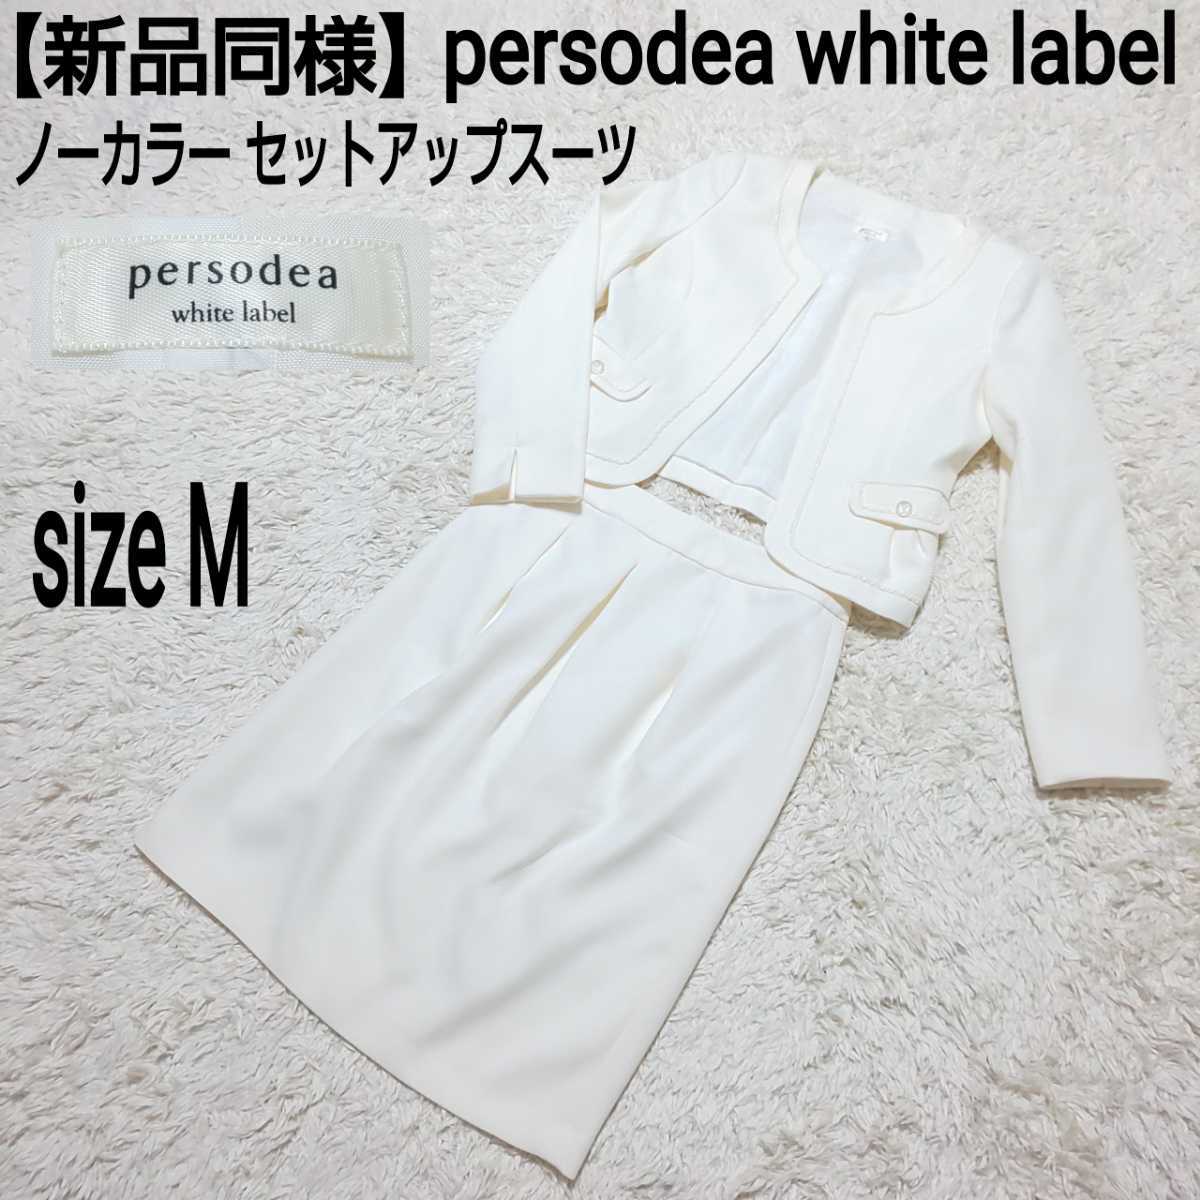 persodea white label フォーマル2点セット Sサイズ | www.myglobaltax.com